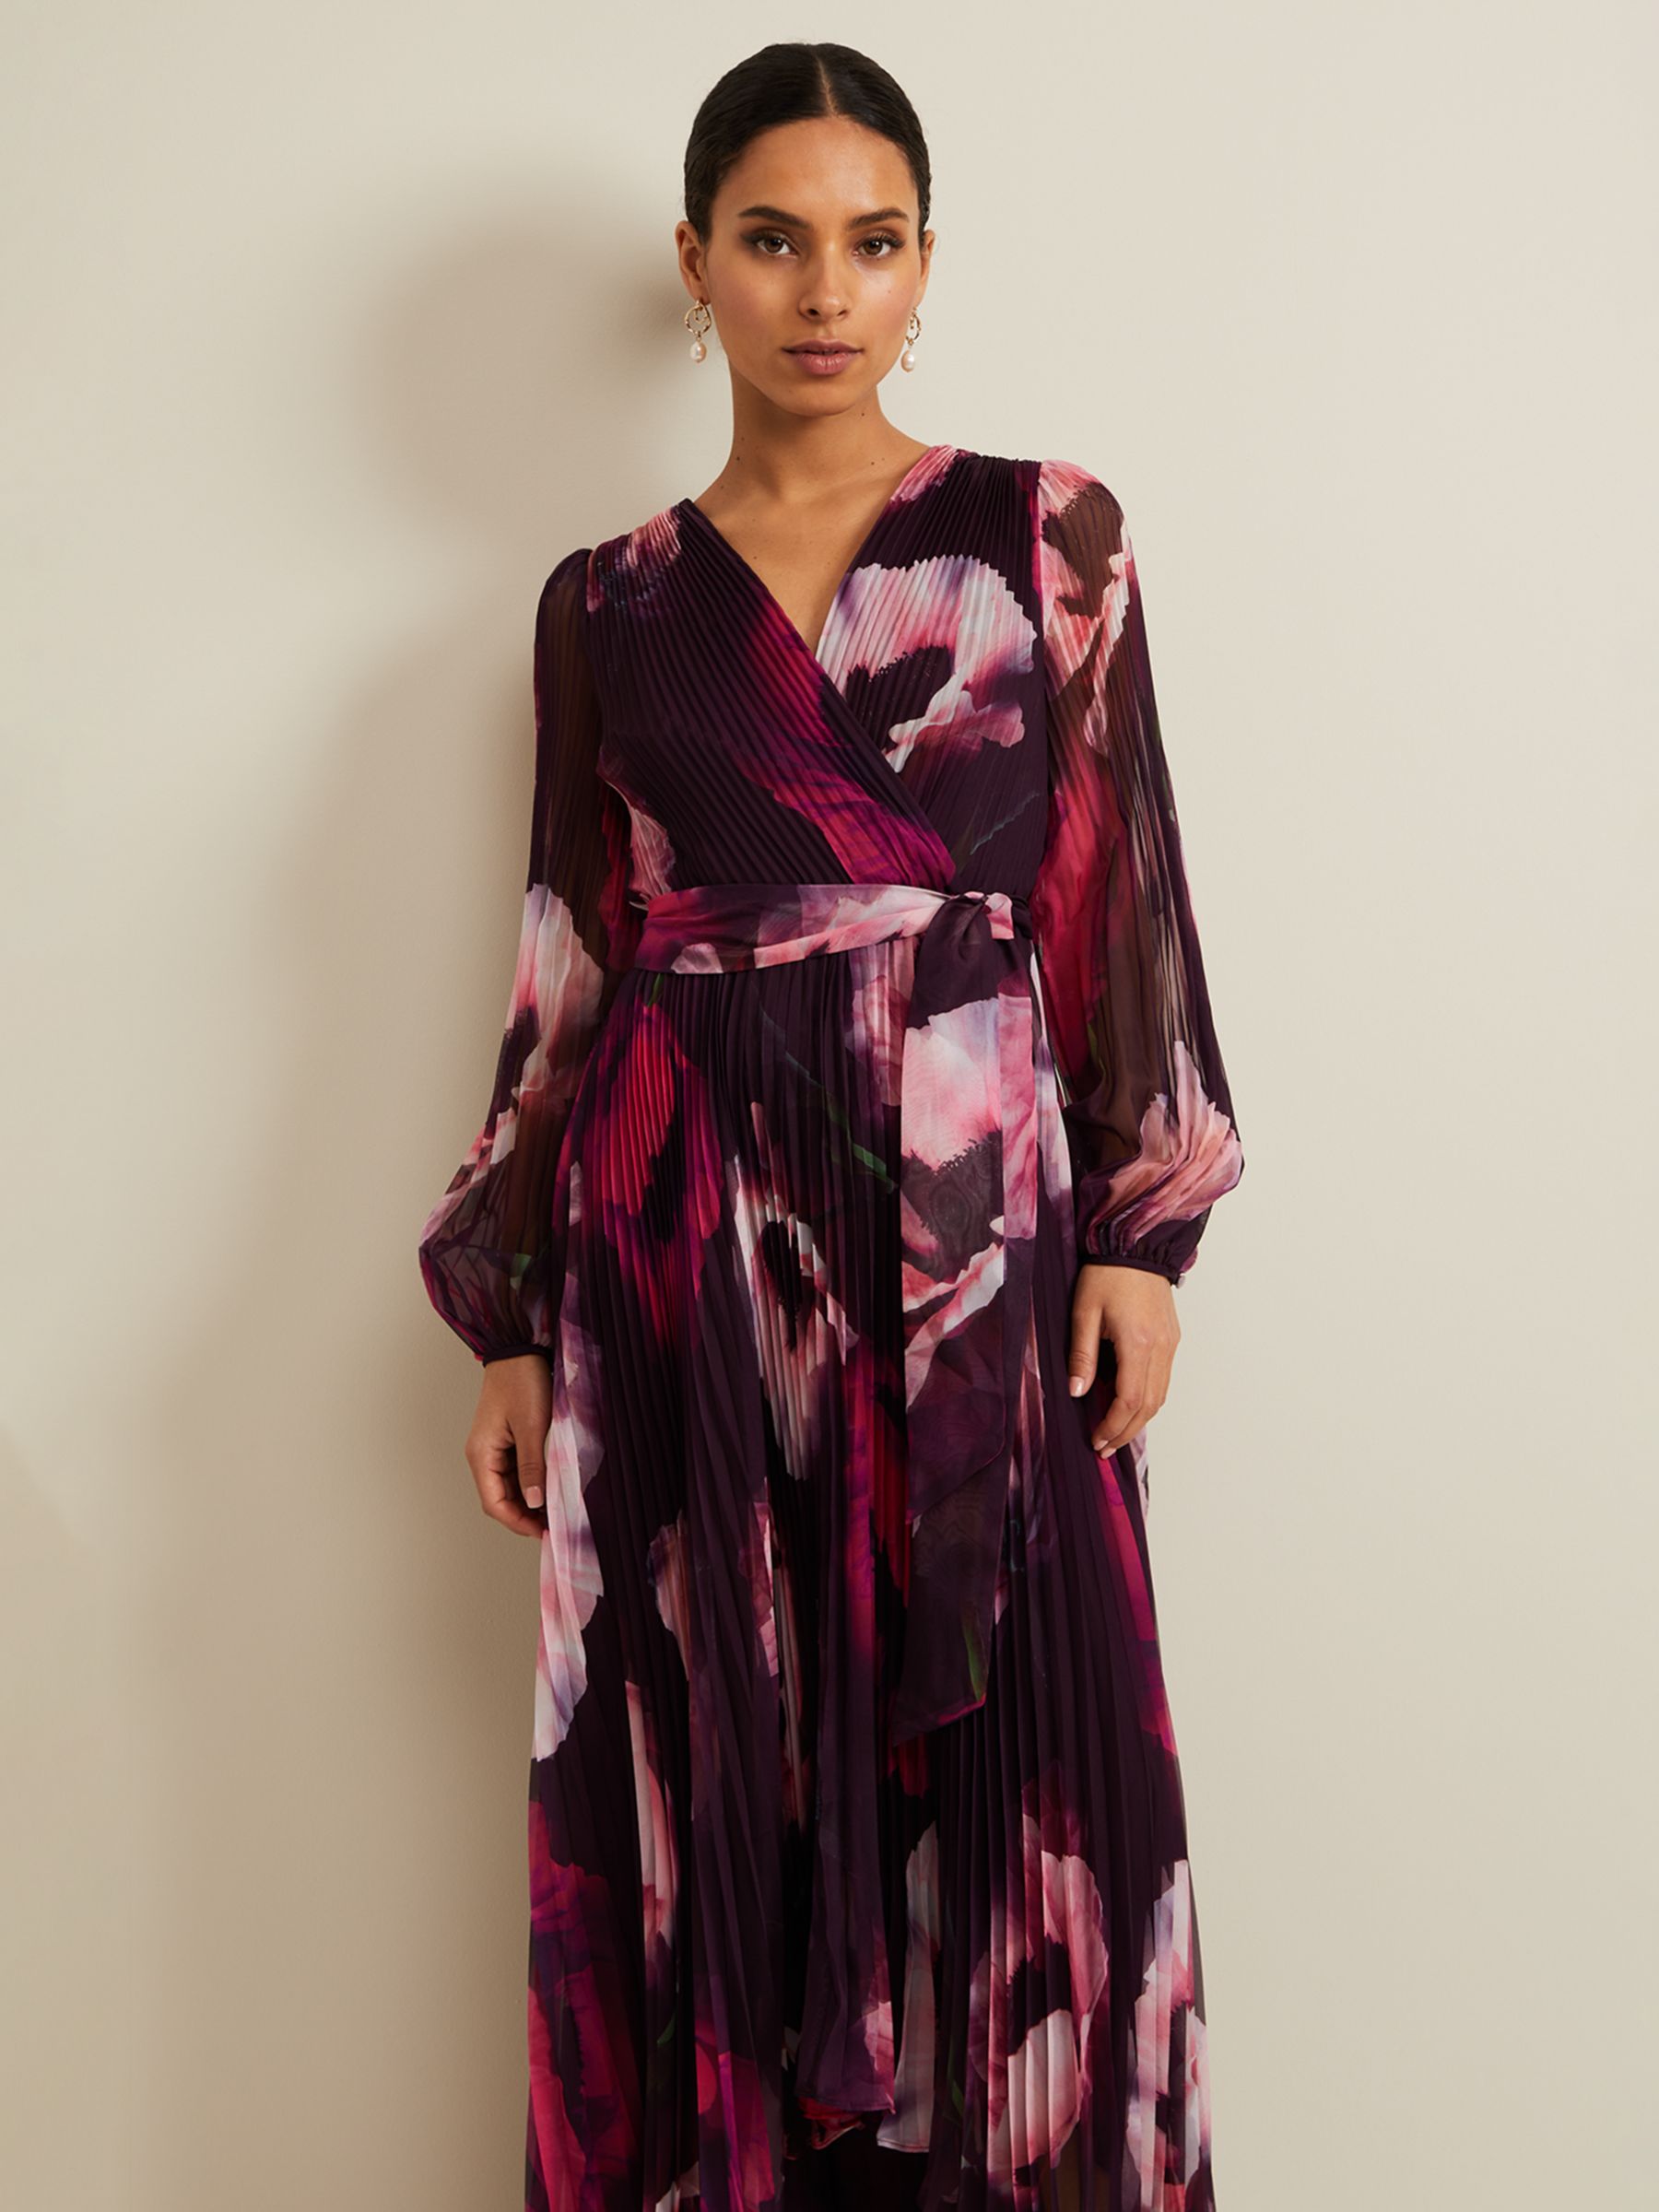  Isadora Lace Lingerie Medium/Dark Purple: Clothing